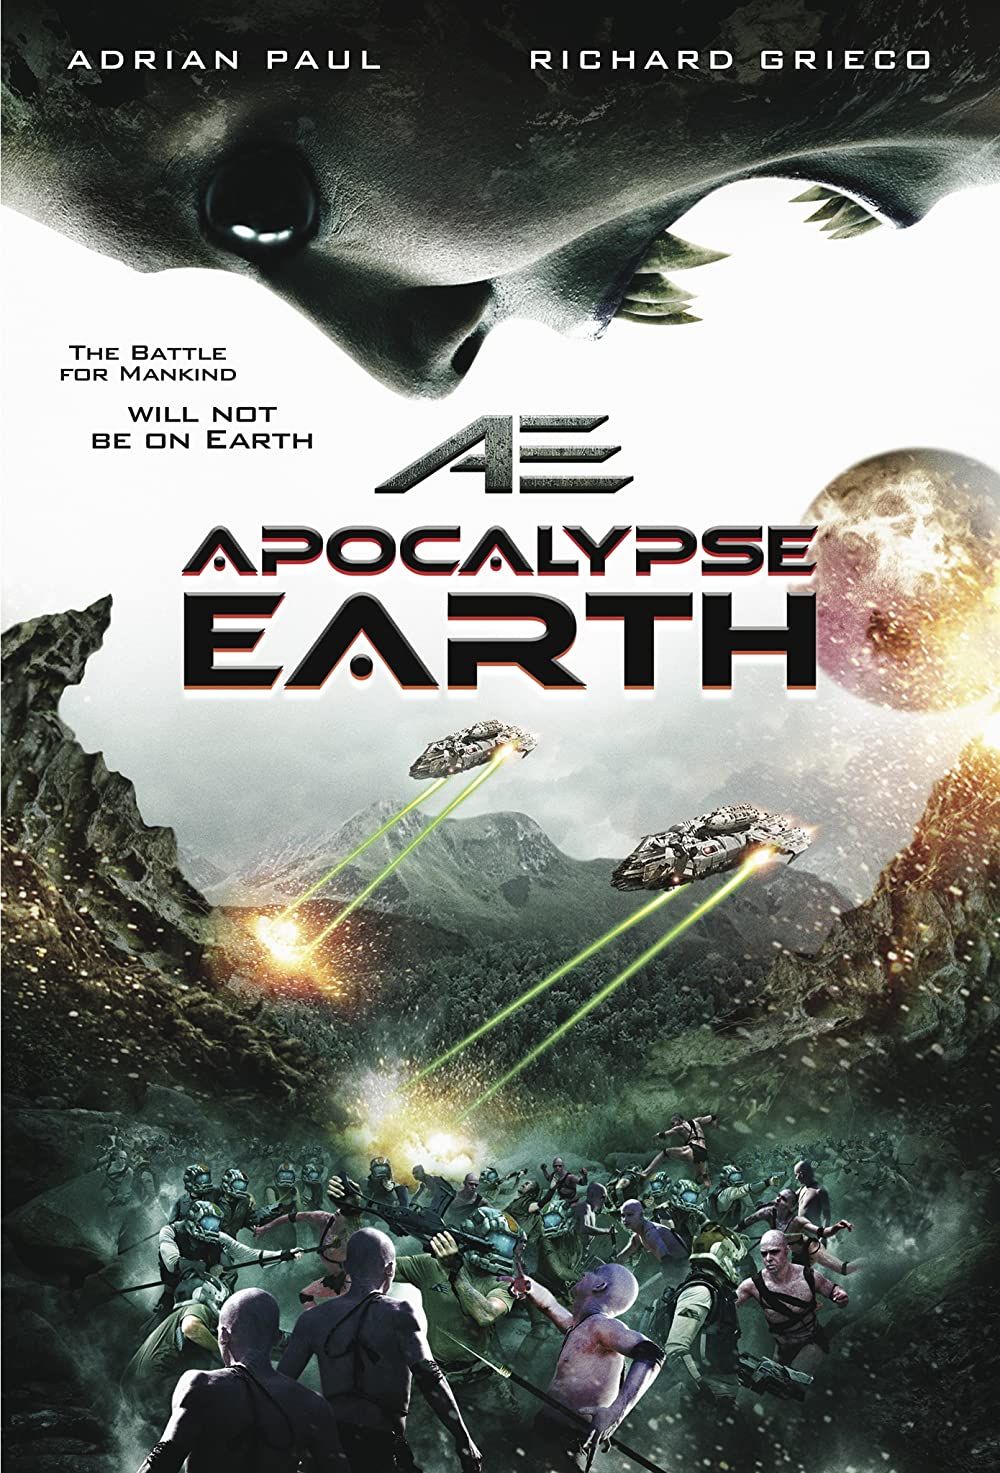 AE Apocalypse Earth (2013) Hindi Dubbed BluRay download full movie